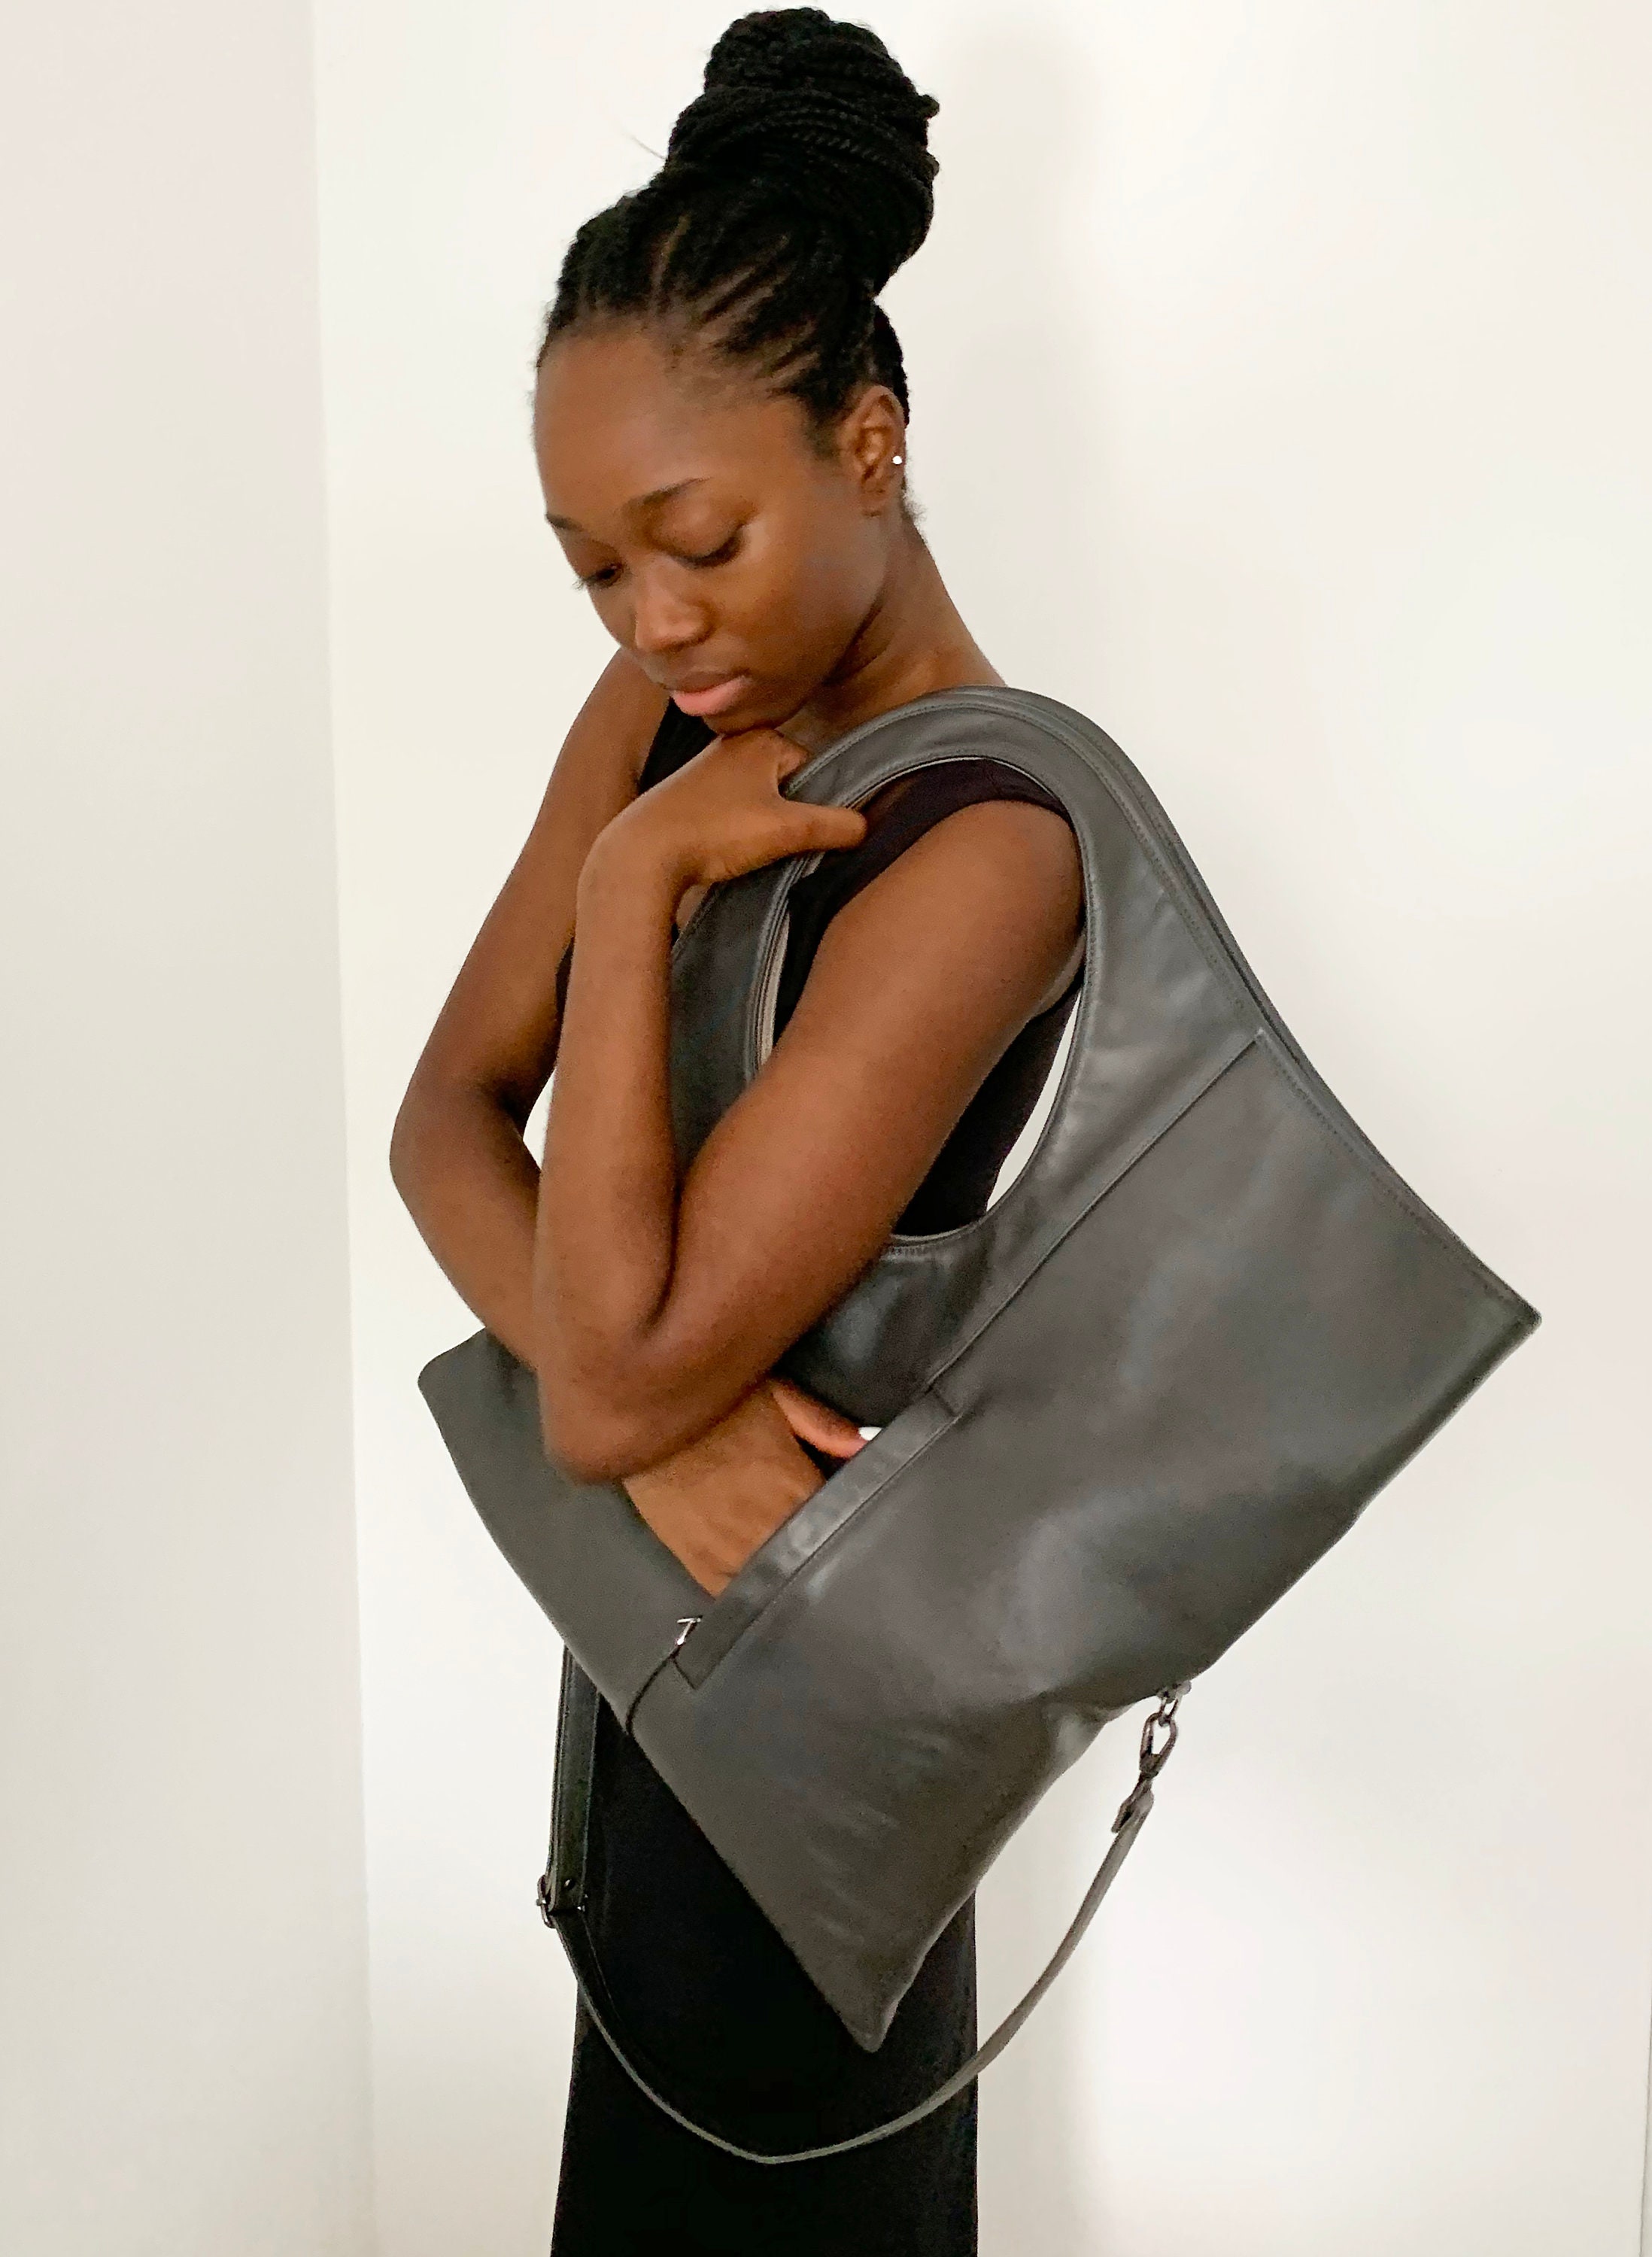 Small Grey Helen Hobo Purse - Soft Leather Bag